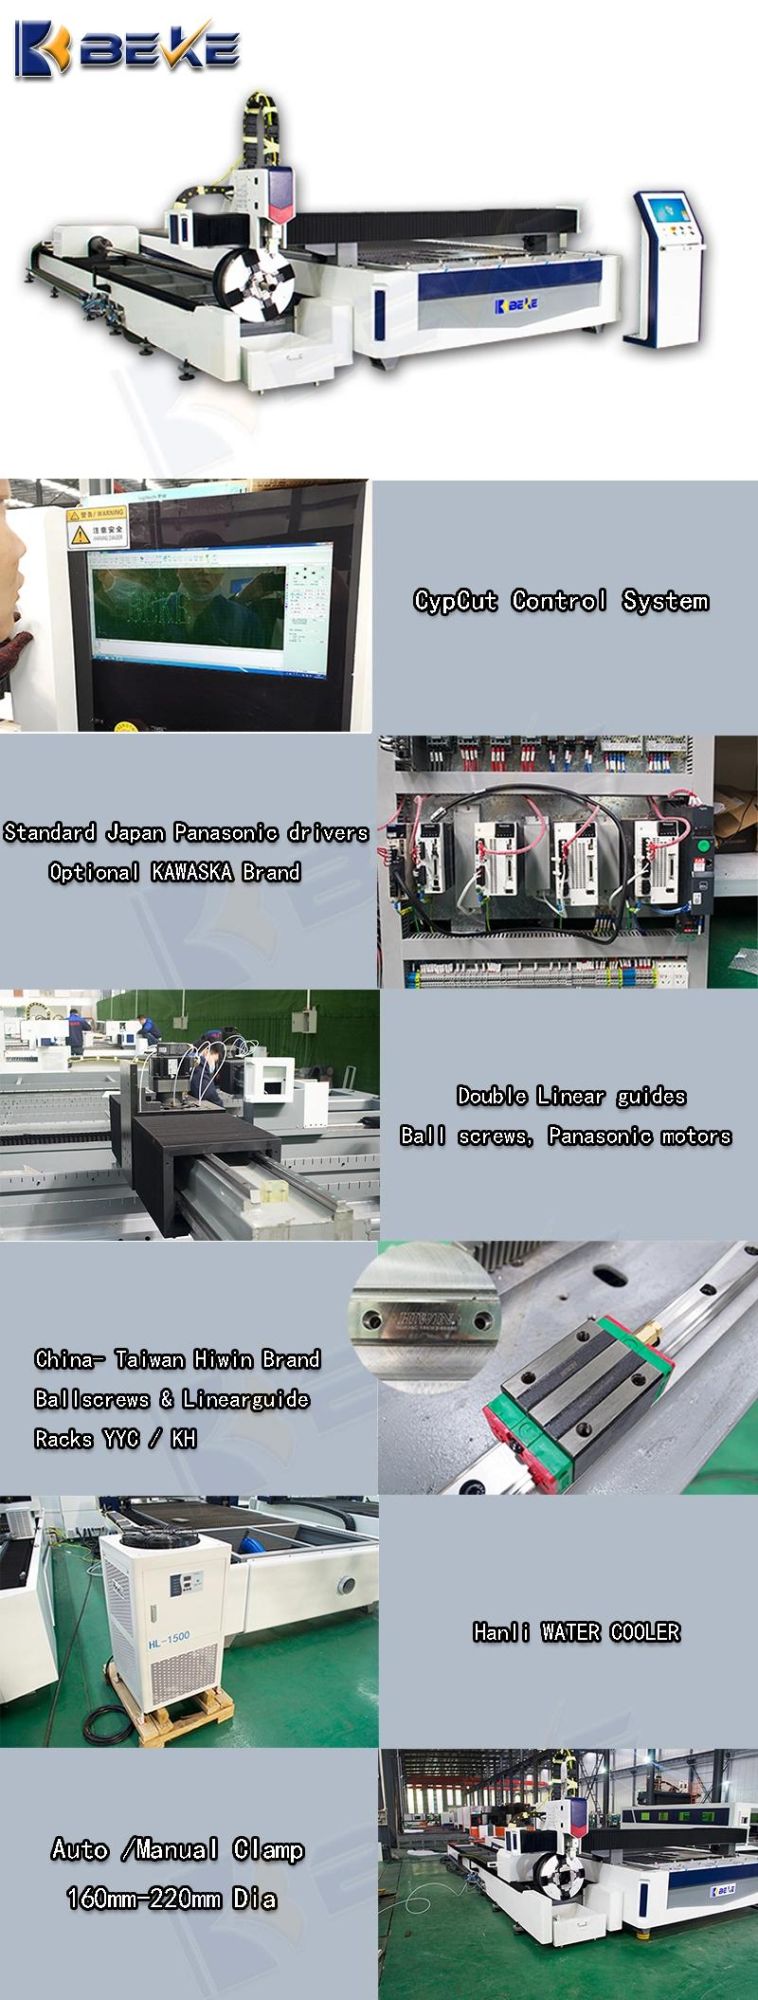 Bk4020 CNC Fiber Laser Cutter for Metal Sheet Fiber Laser Cutting Machine Sale Online